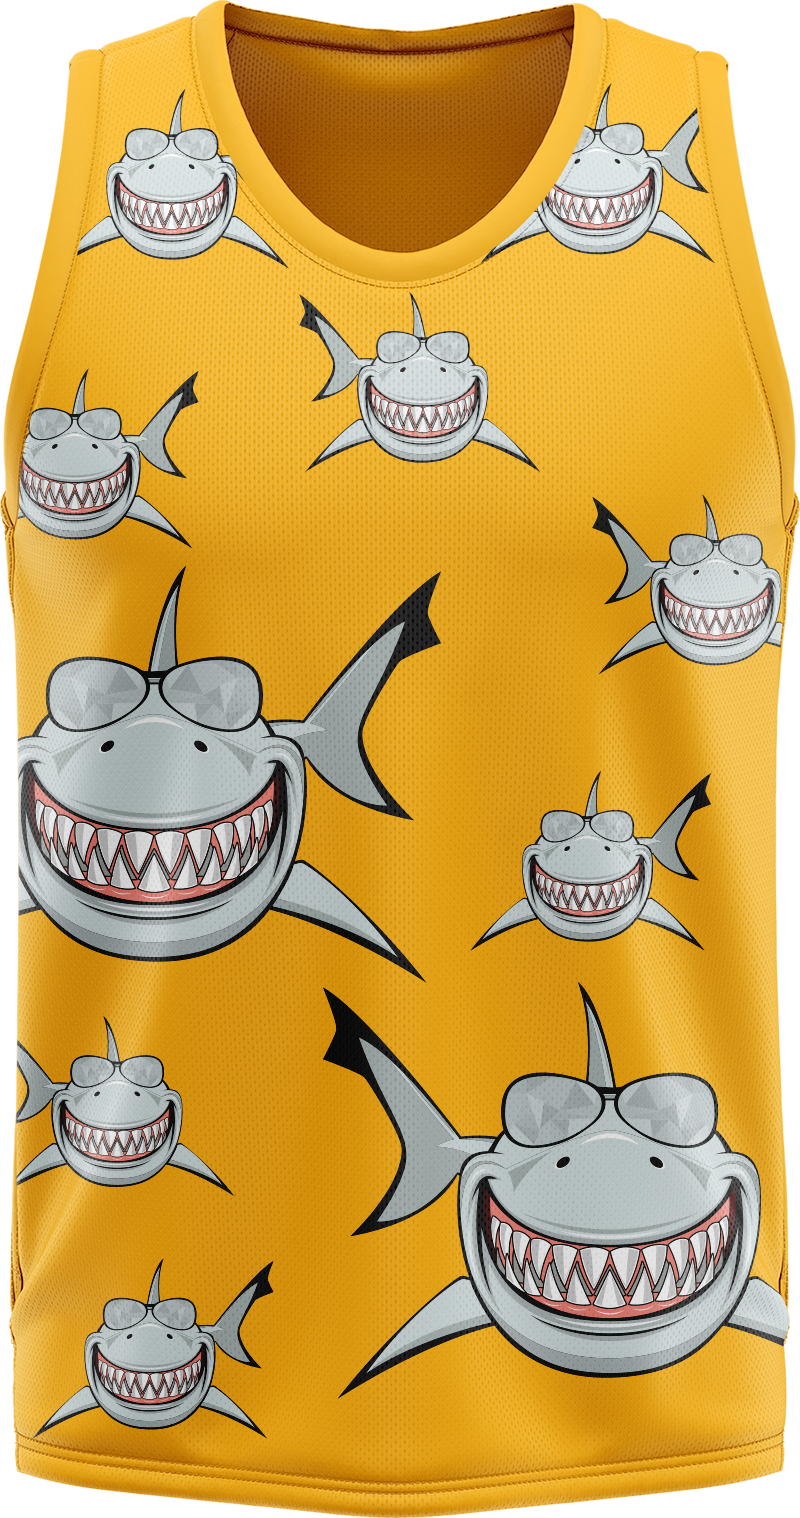 Snazzy Shark Basketball Jersey